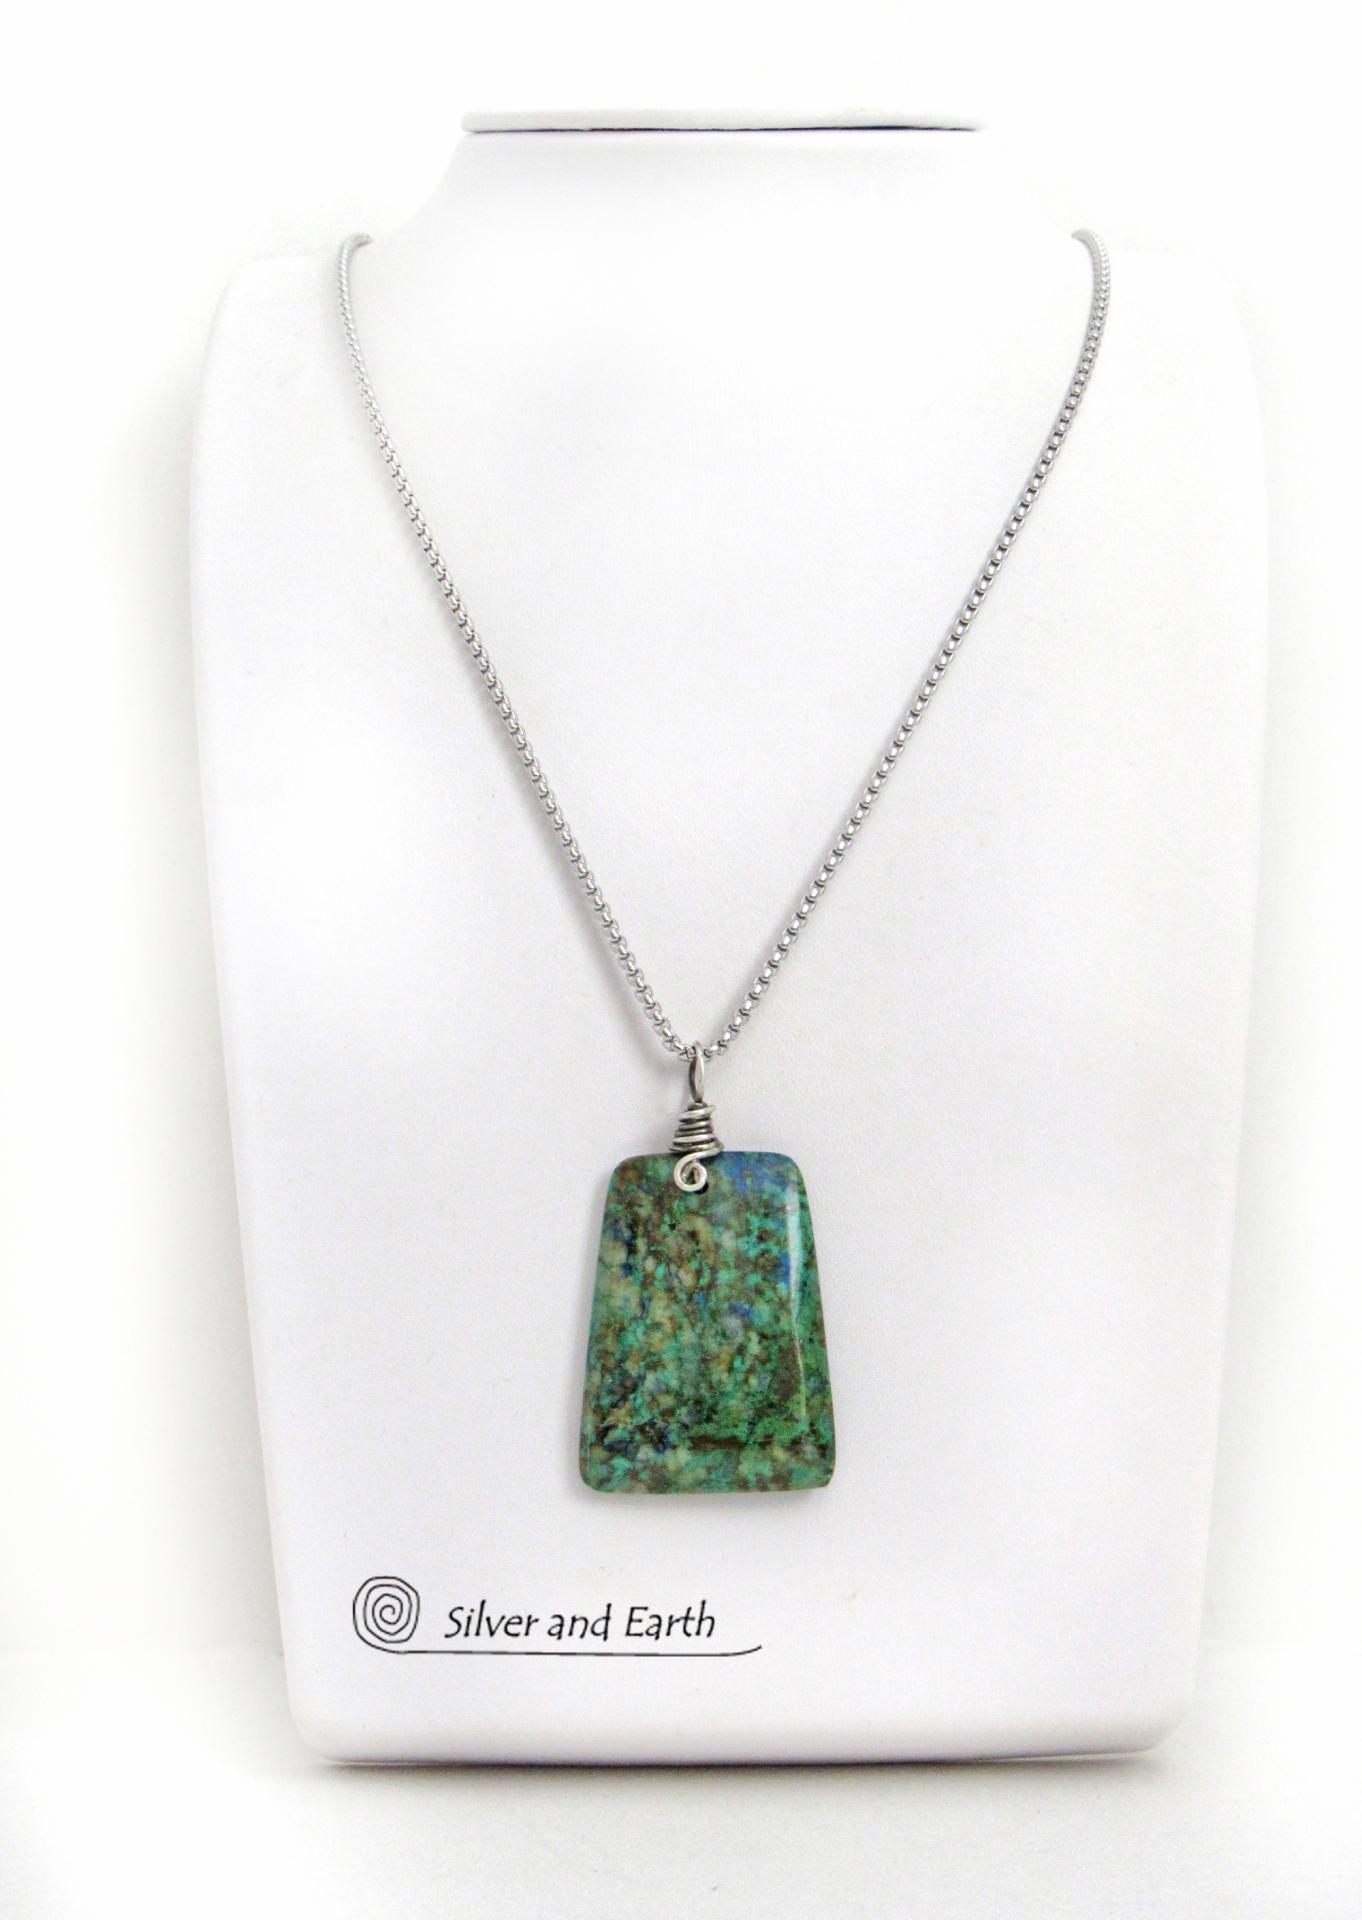 Azurite Malachite Blue Green Pendant Necklace - Modern Simplistic Gemstone Jewelry